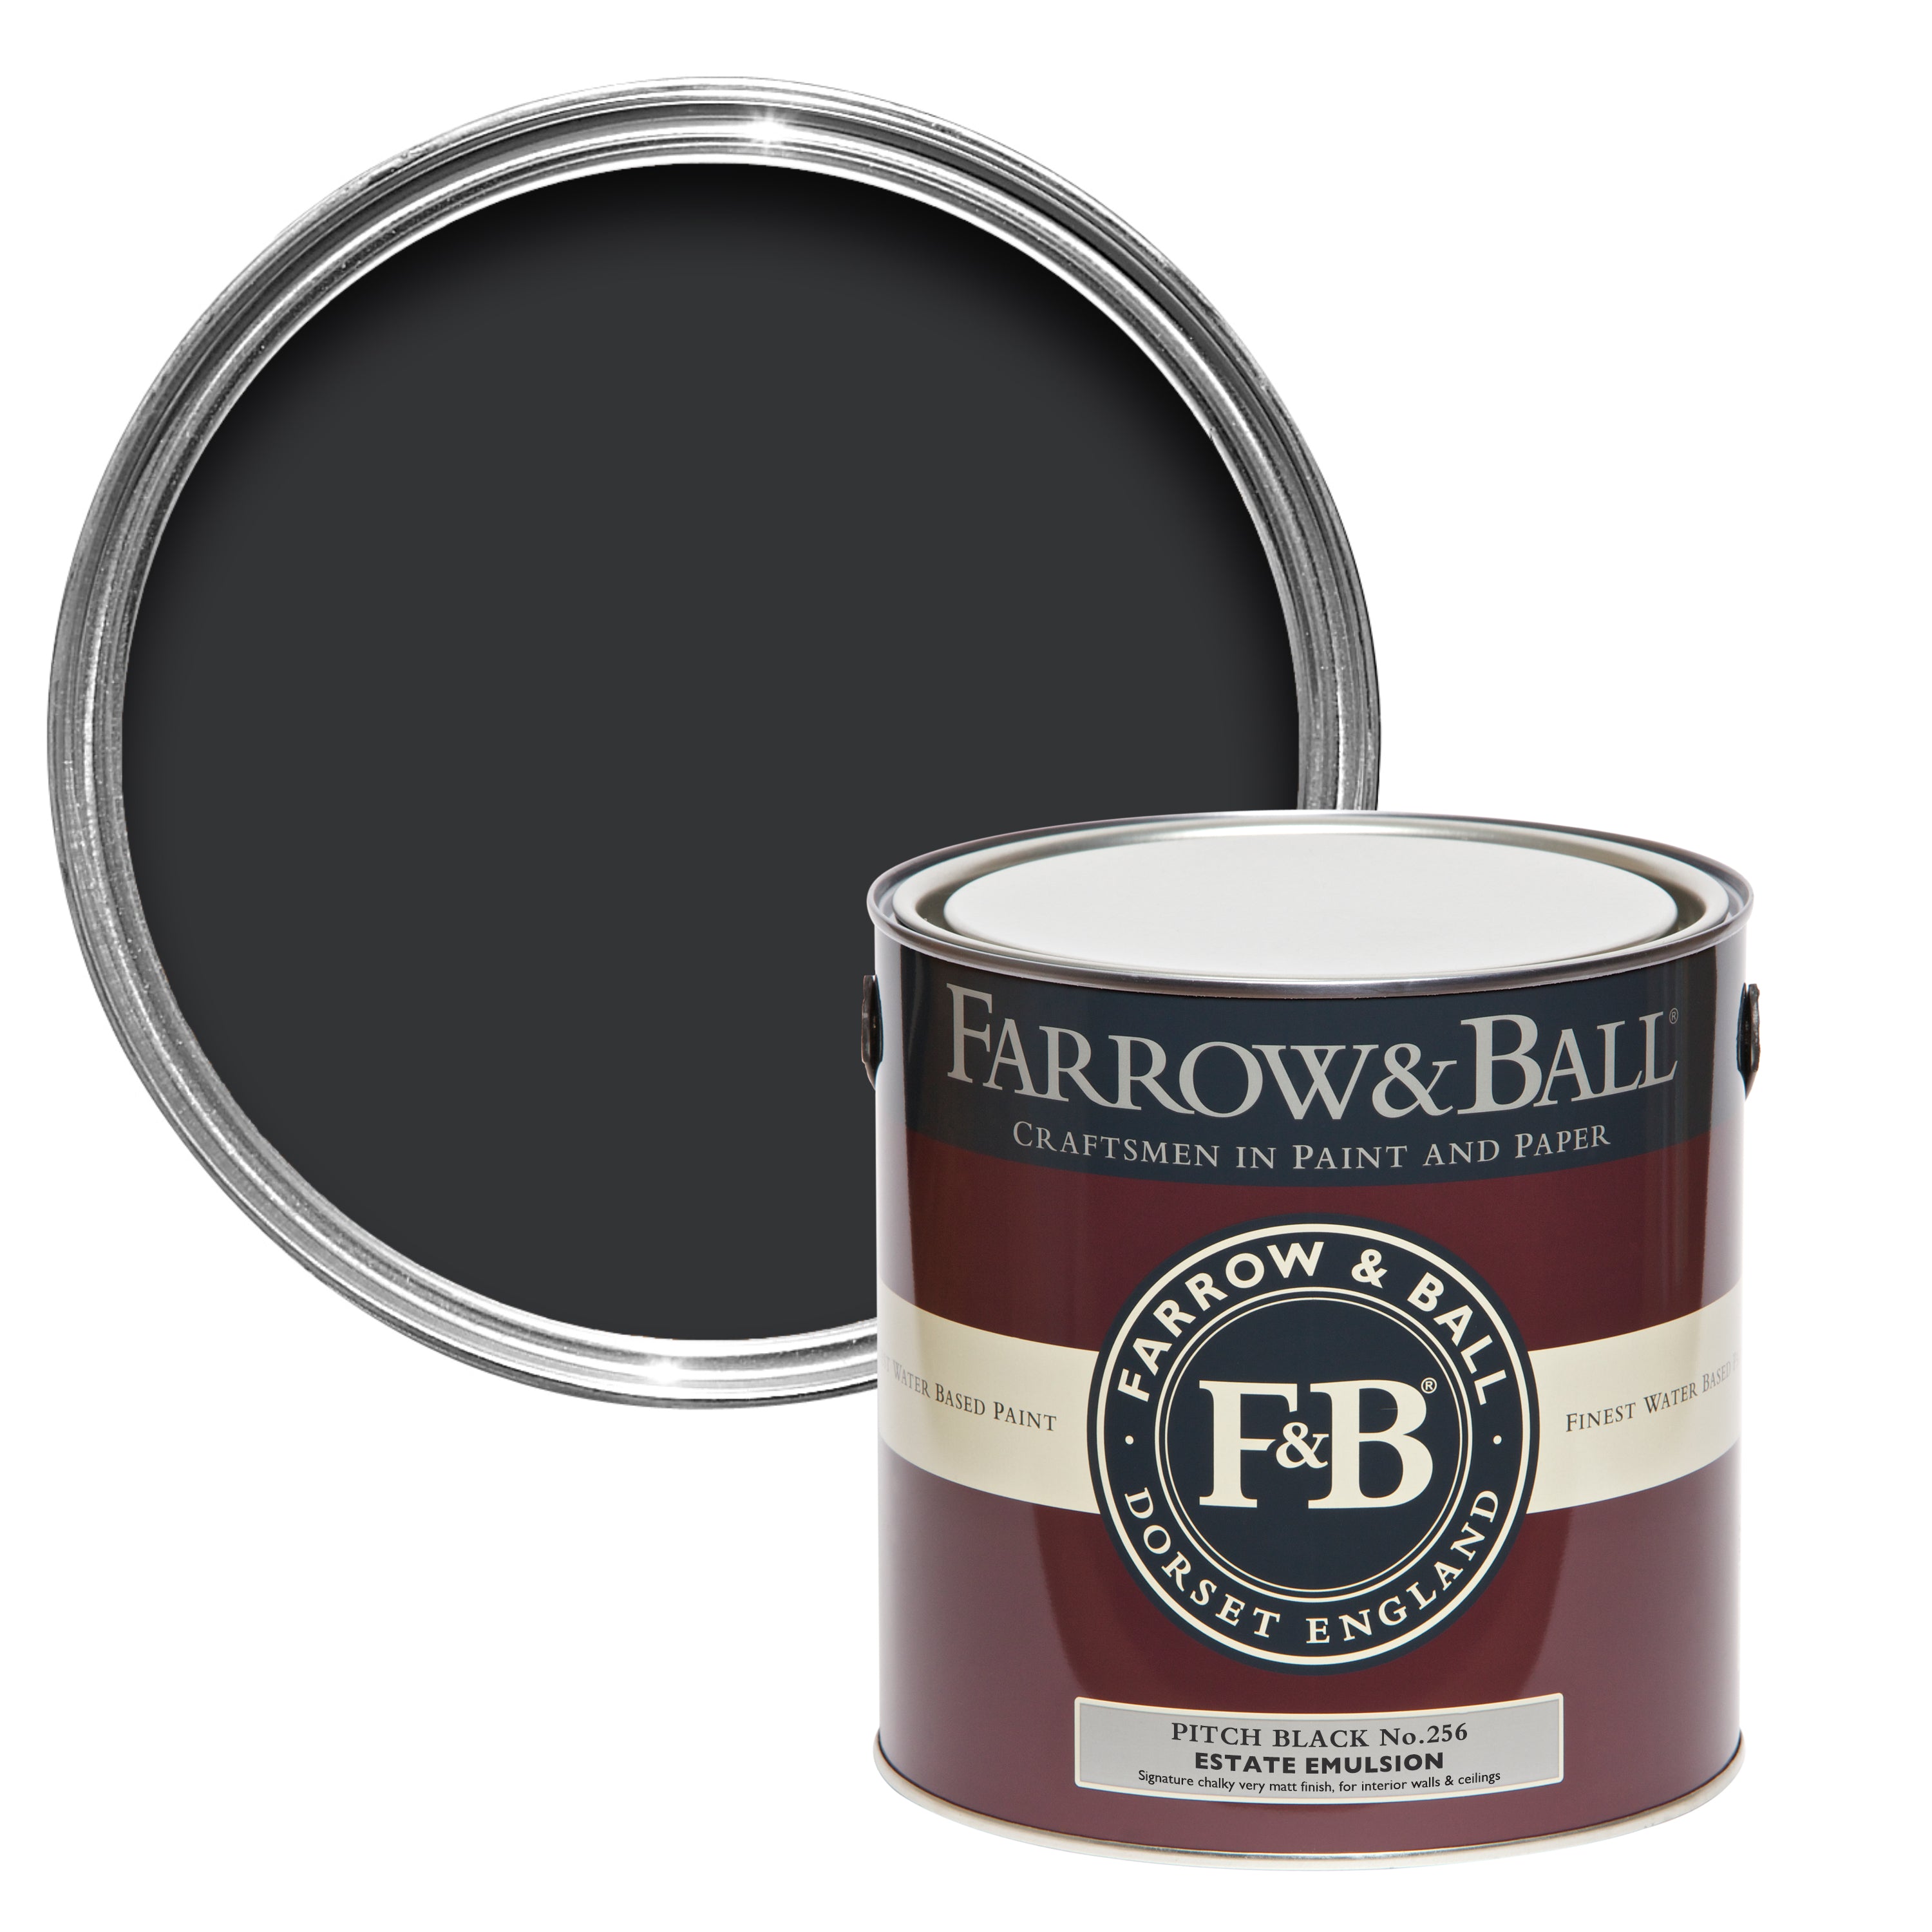 Pitch Black No. 256 | Farrow & Ball